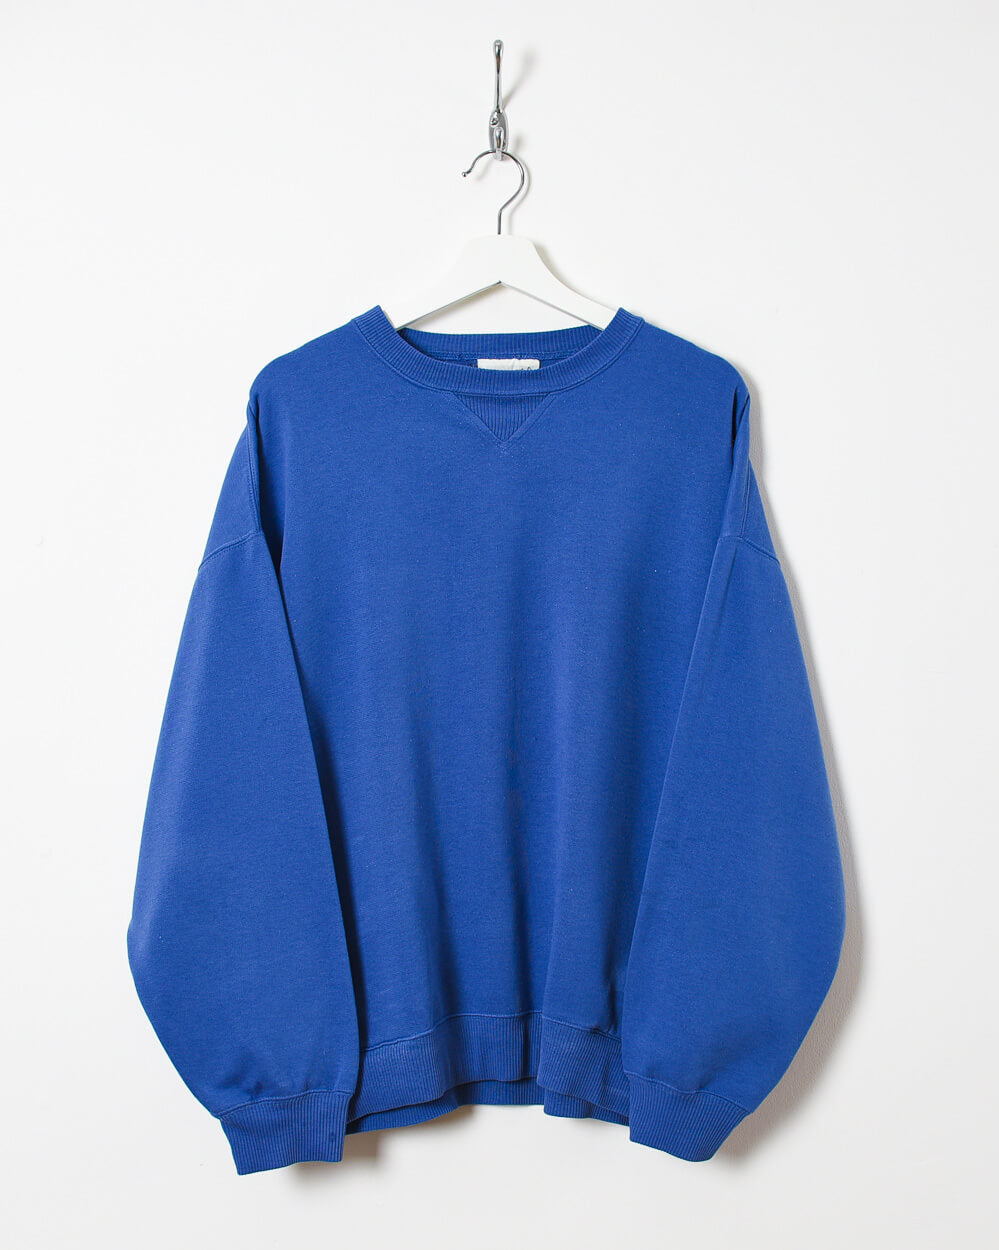 Le Coq Sportif Sweatshirt - Medium - Domno Vintage 90s, 80s, 00s Retro and Vintage Clothing 